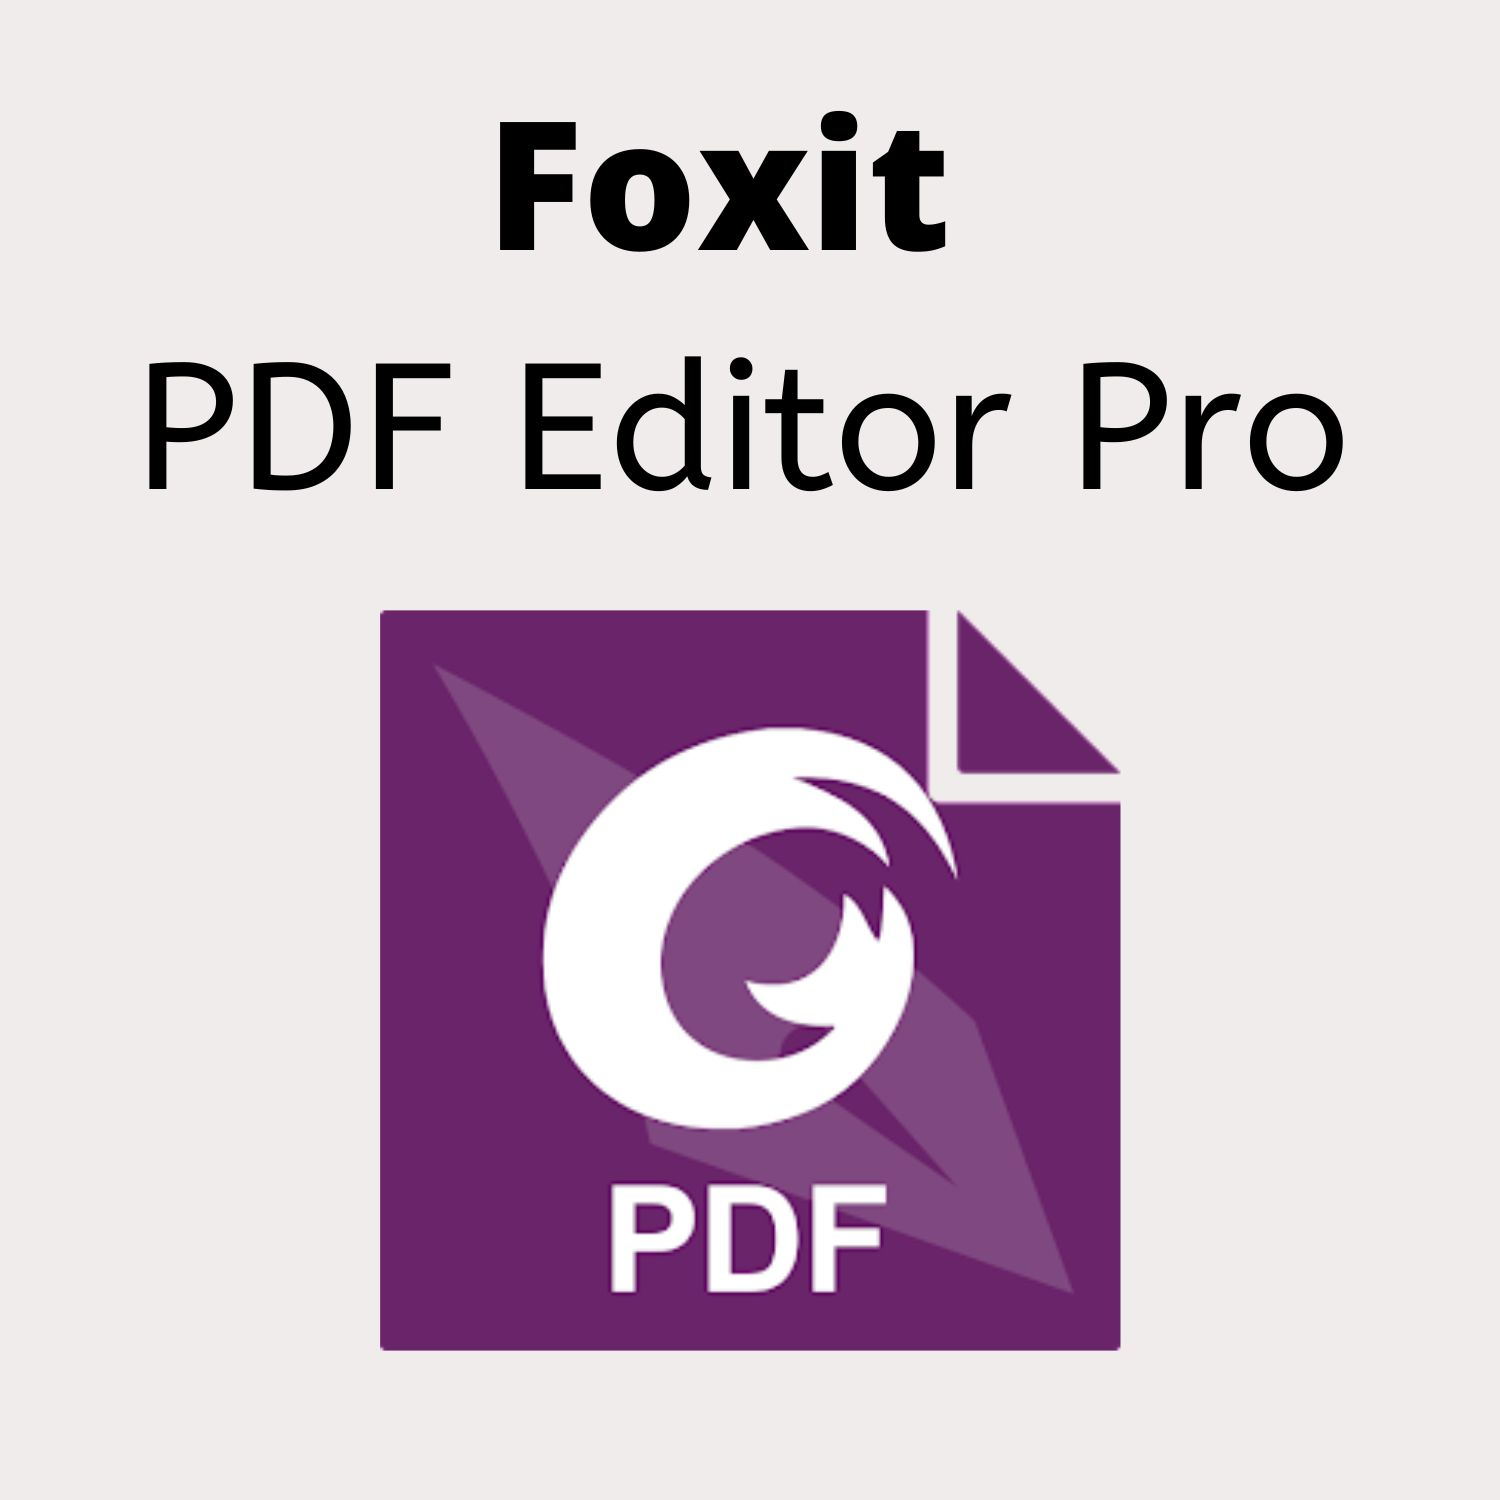 Foxit PDF Editor Pro 12.1.2.15332